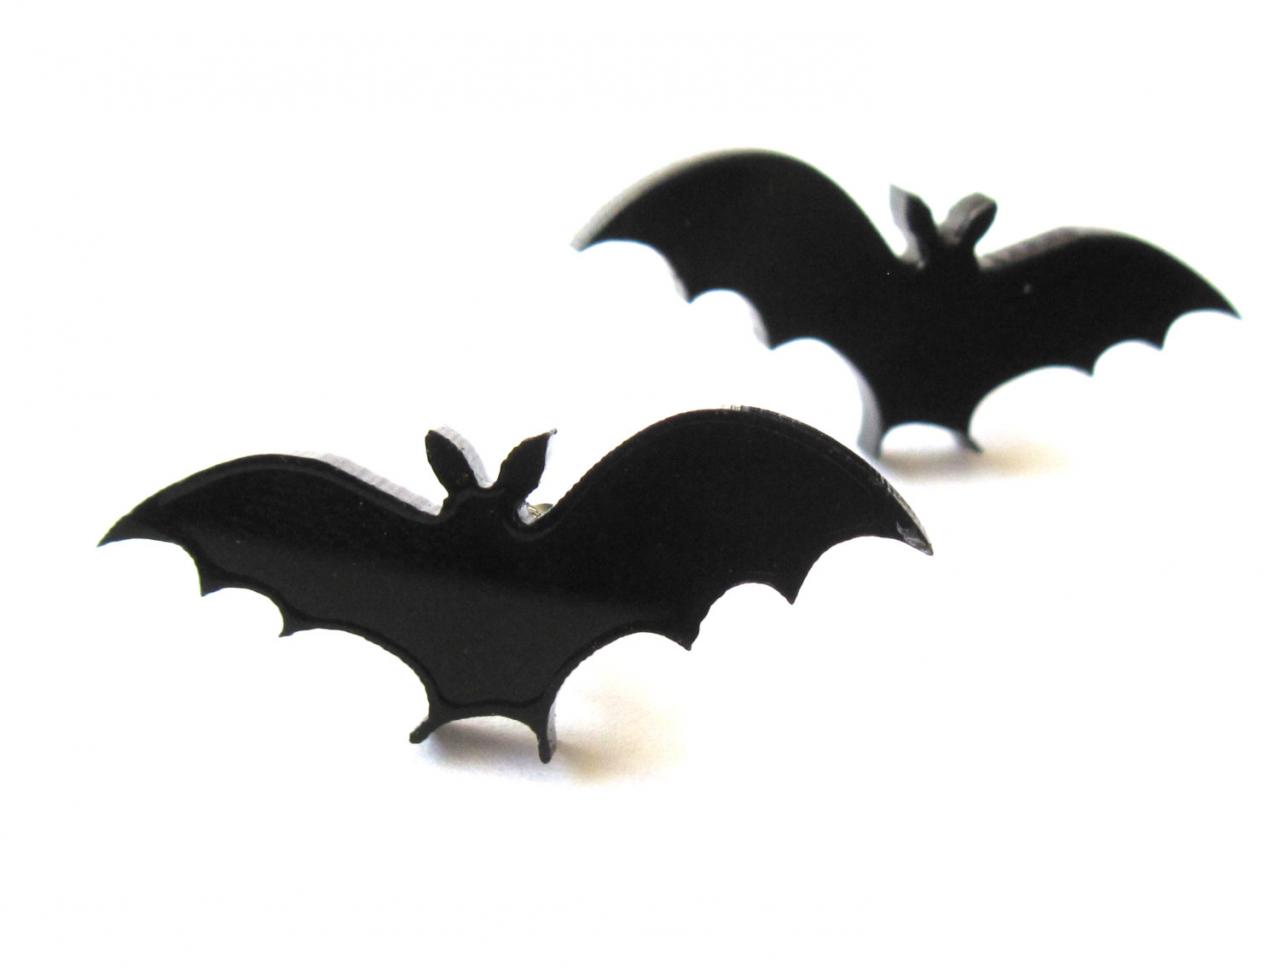 Baronyka Sweet Little Bat Stud Earrings - Bat Jewelry - Nature Jewelry - Animal Jewelry - Black Jewelry - Cute Jewelry - Gift For Her